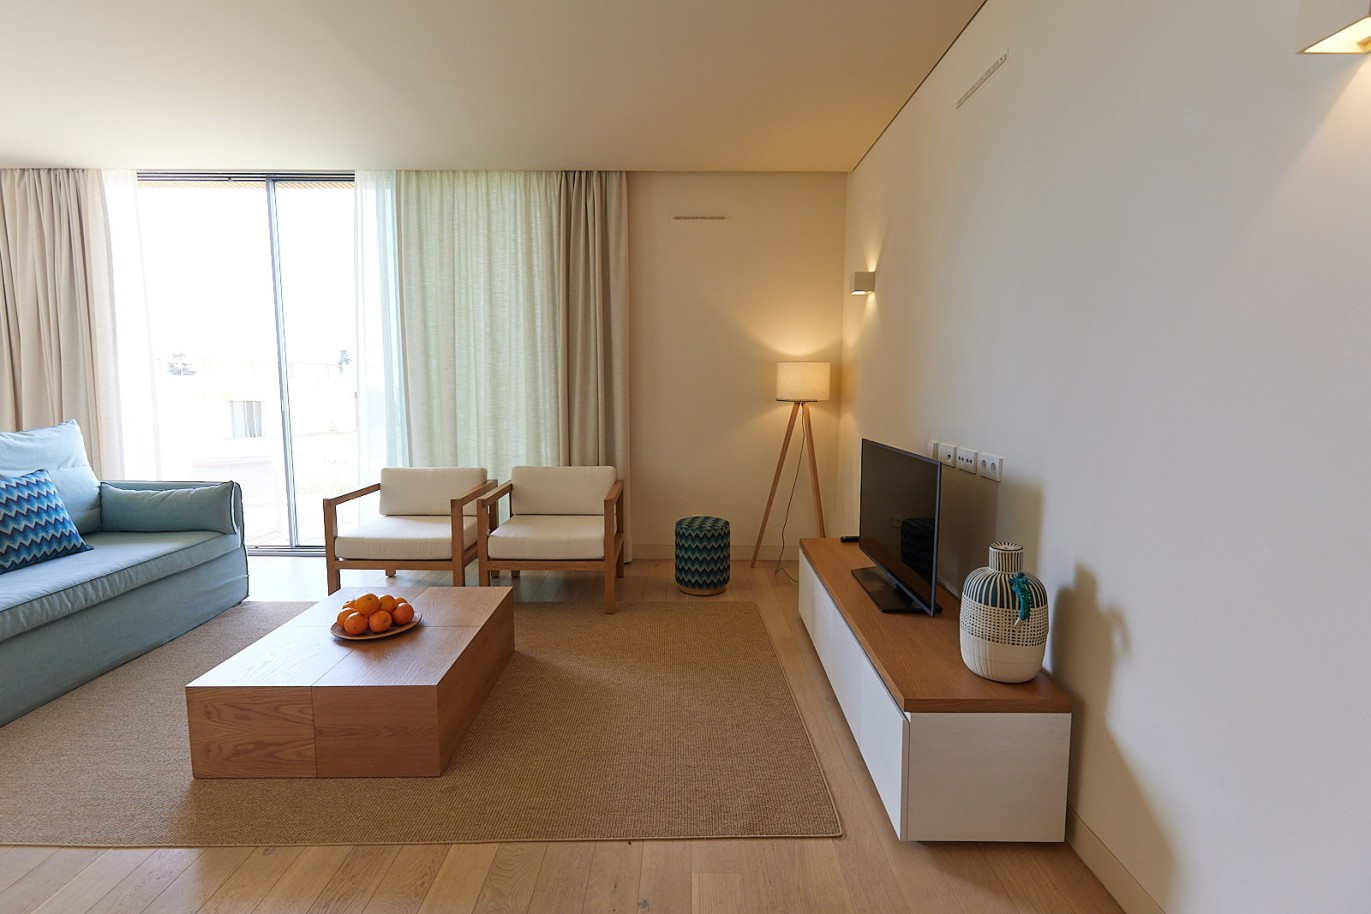 2 bedroom apartment in resort, for sale in Porches, Algarve_228839